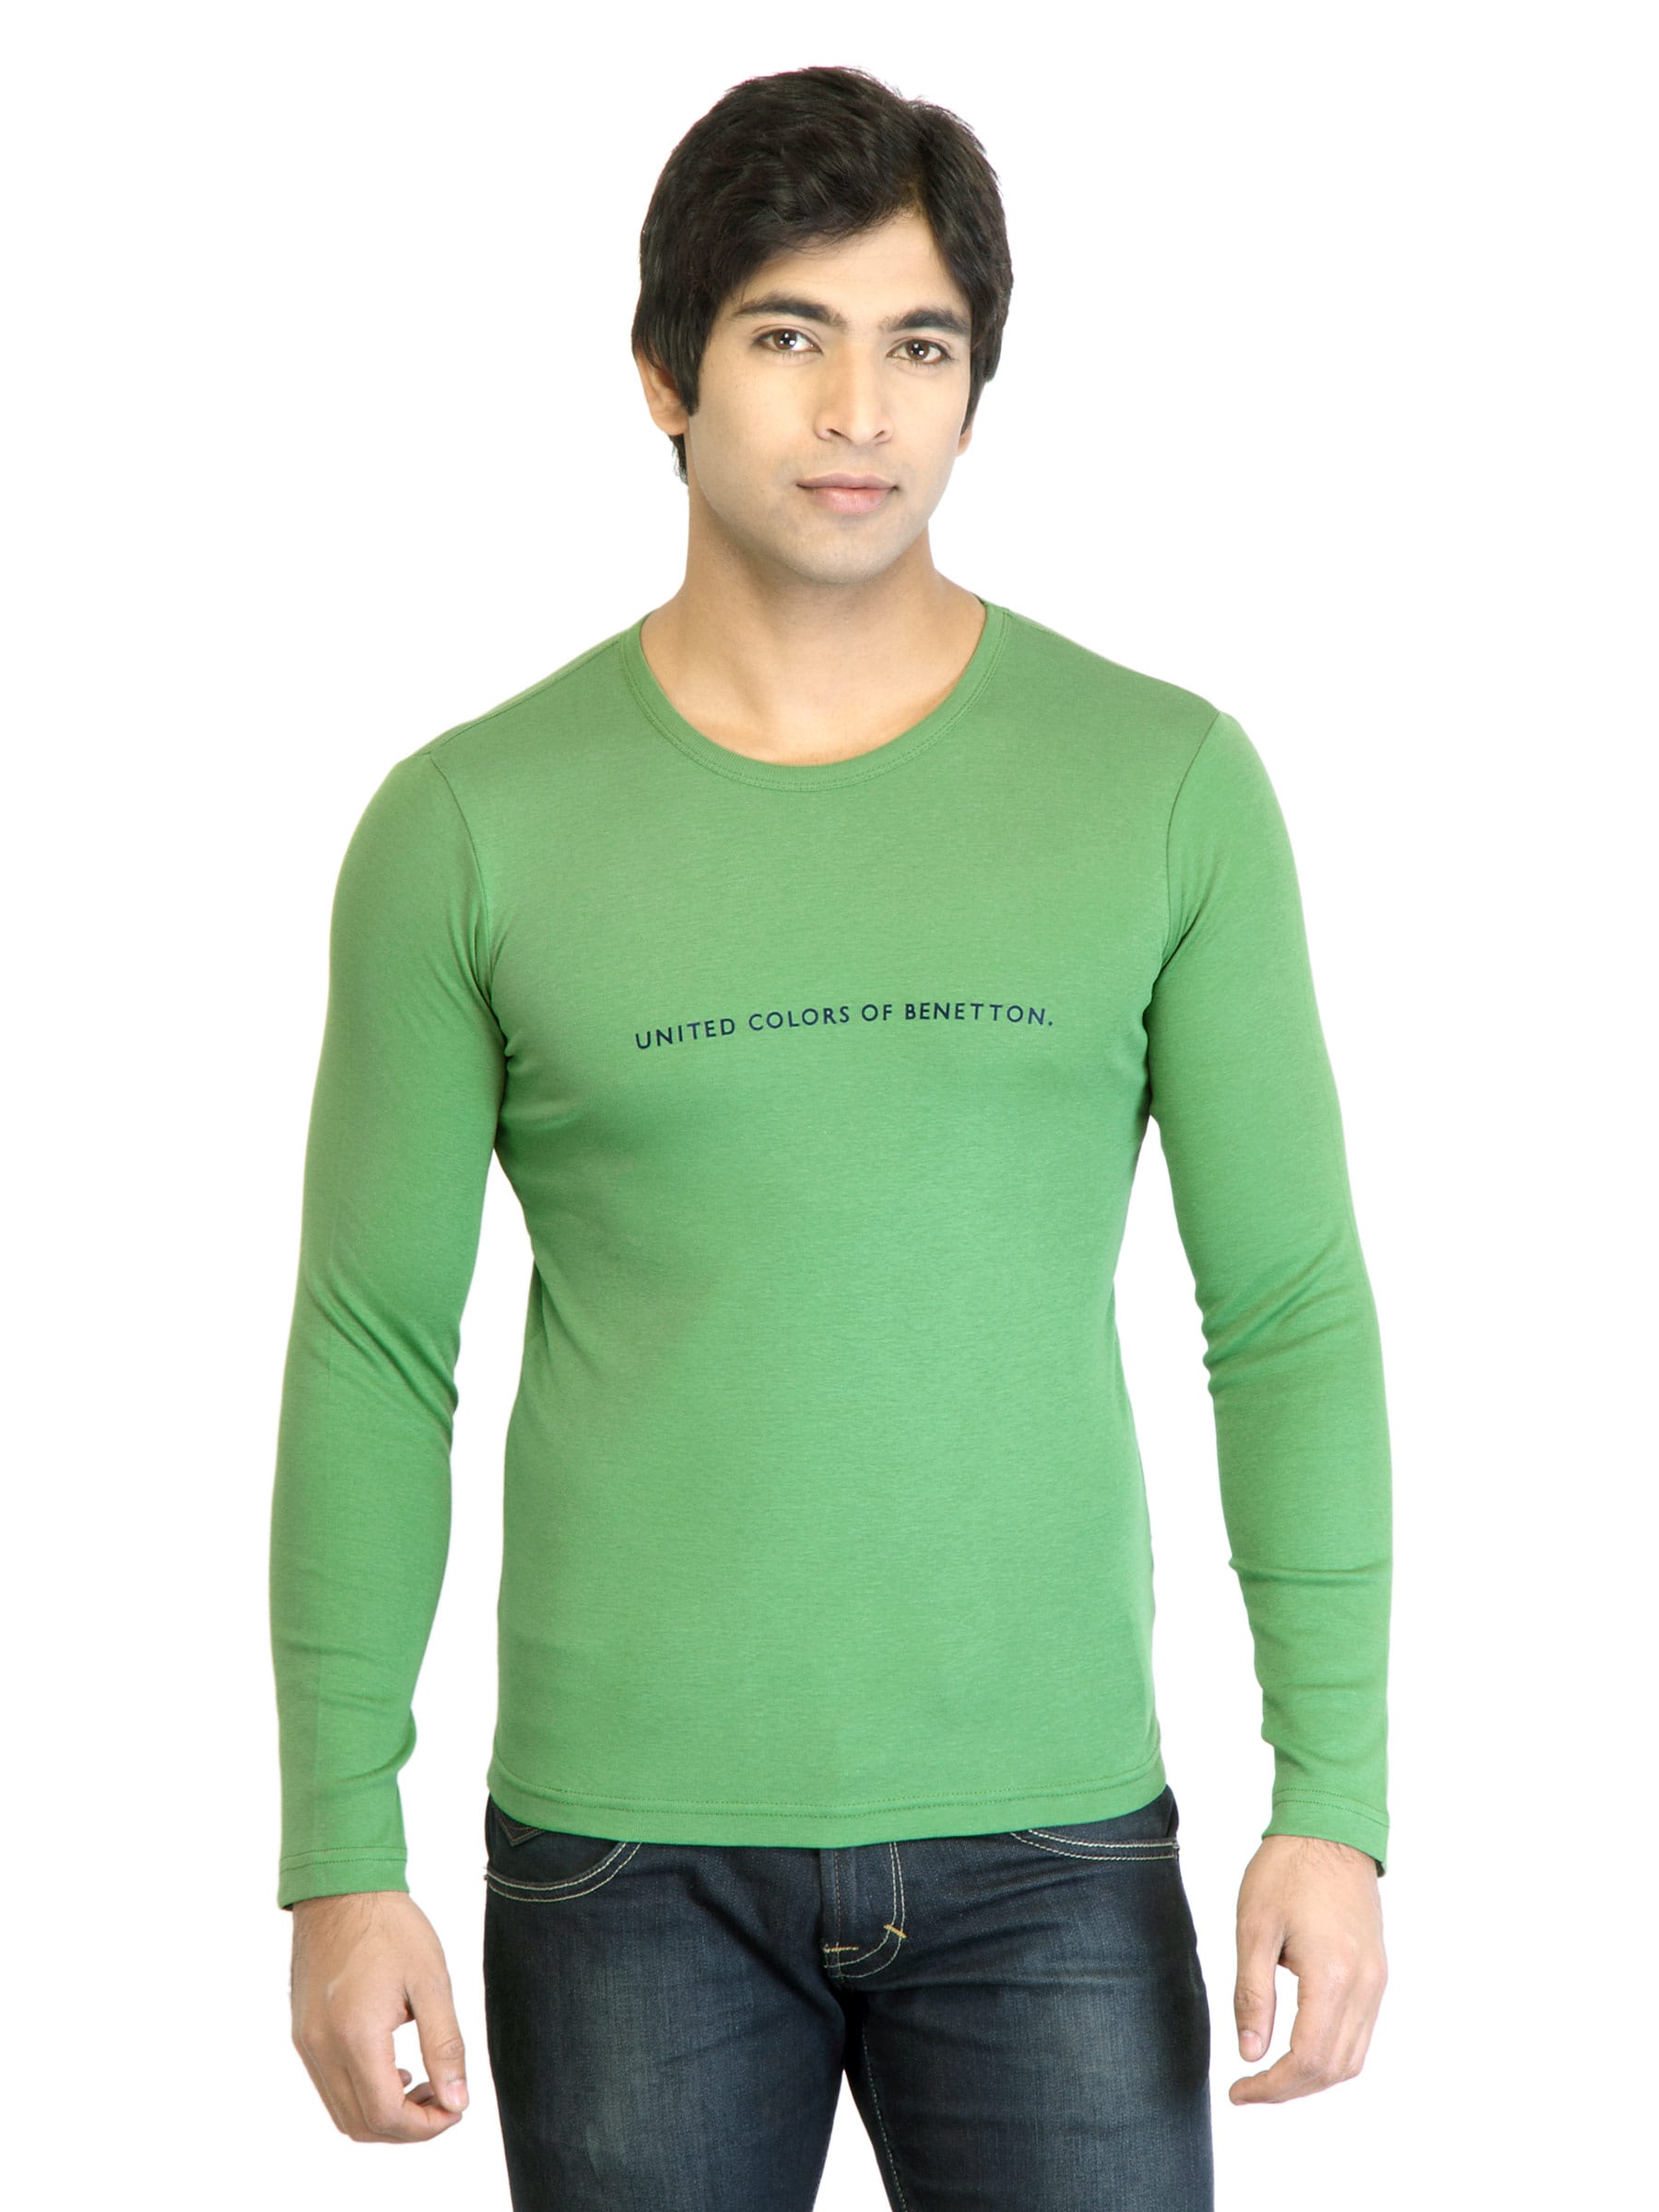 United Colors of Benetton Men Green T-shirt